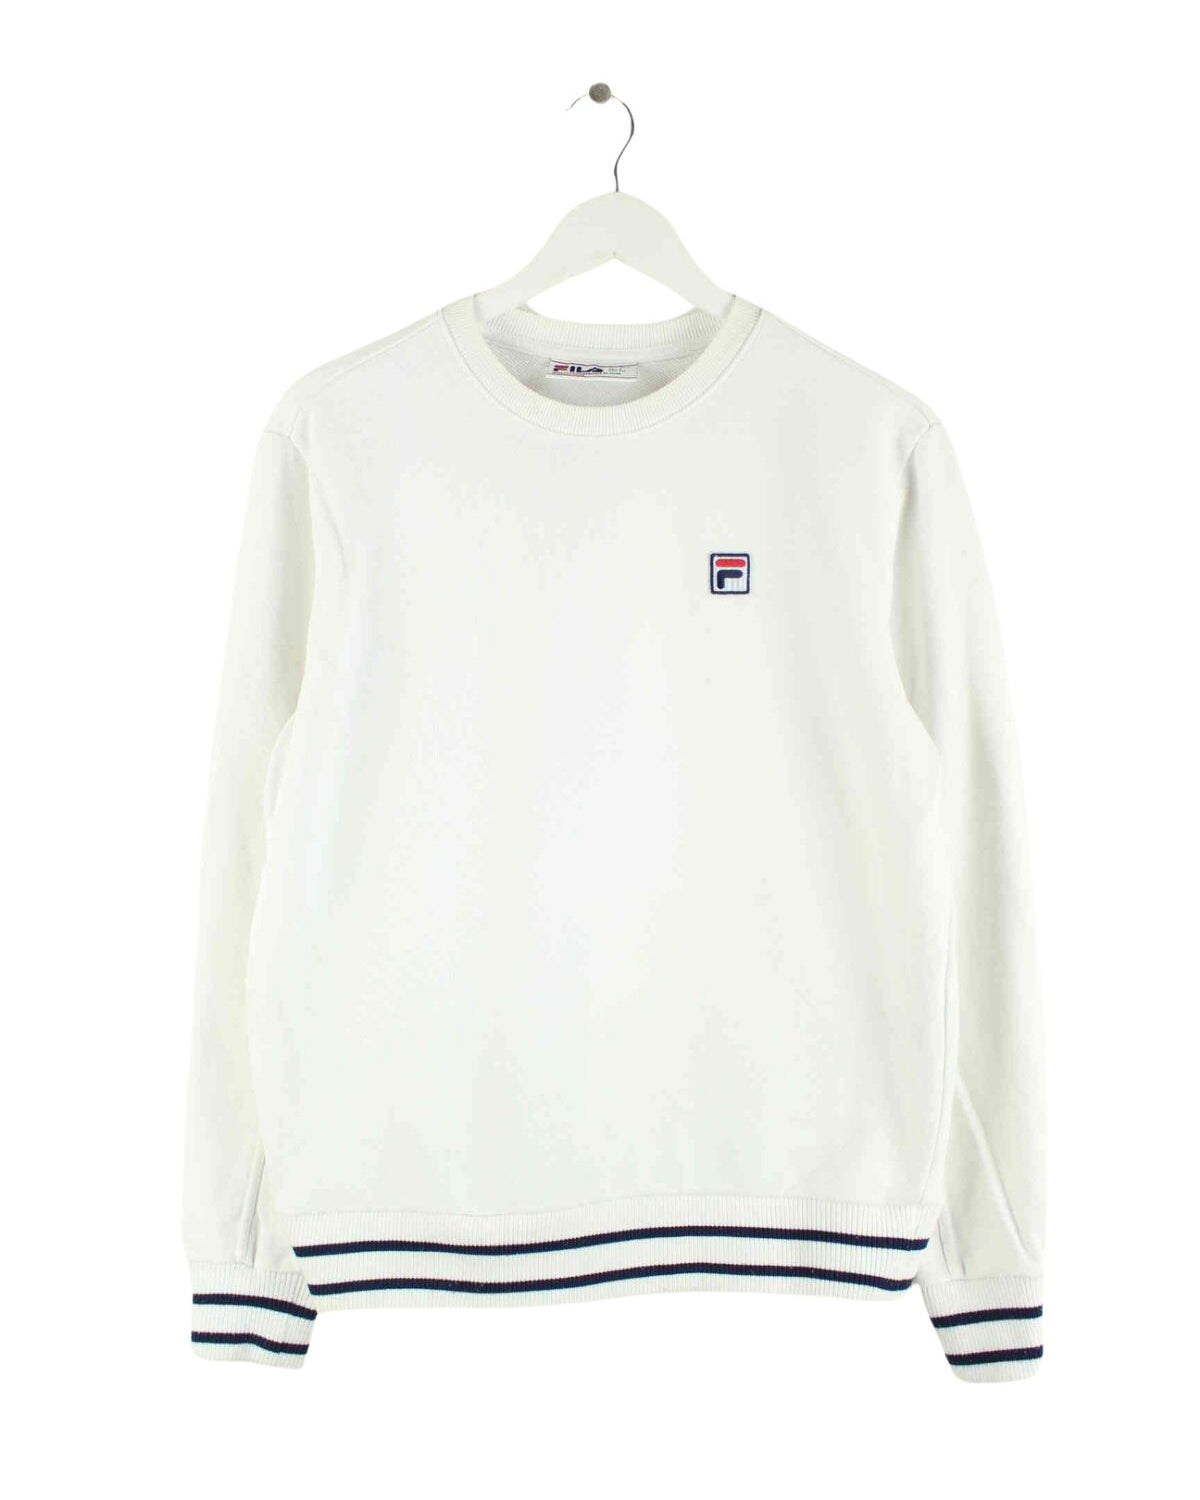 Fila Damen y2k Basic Sweater Weiß S (front image)